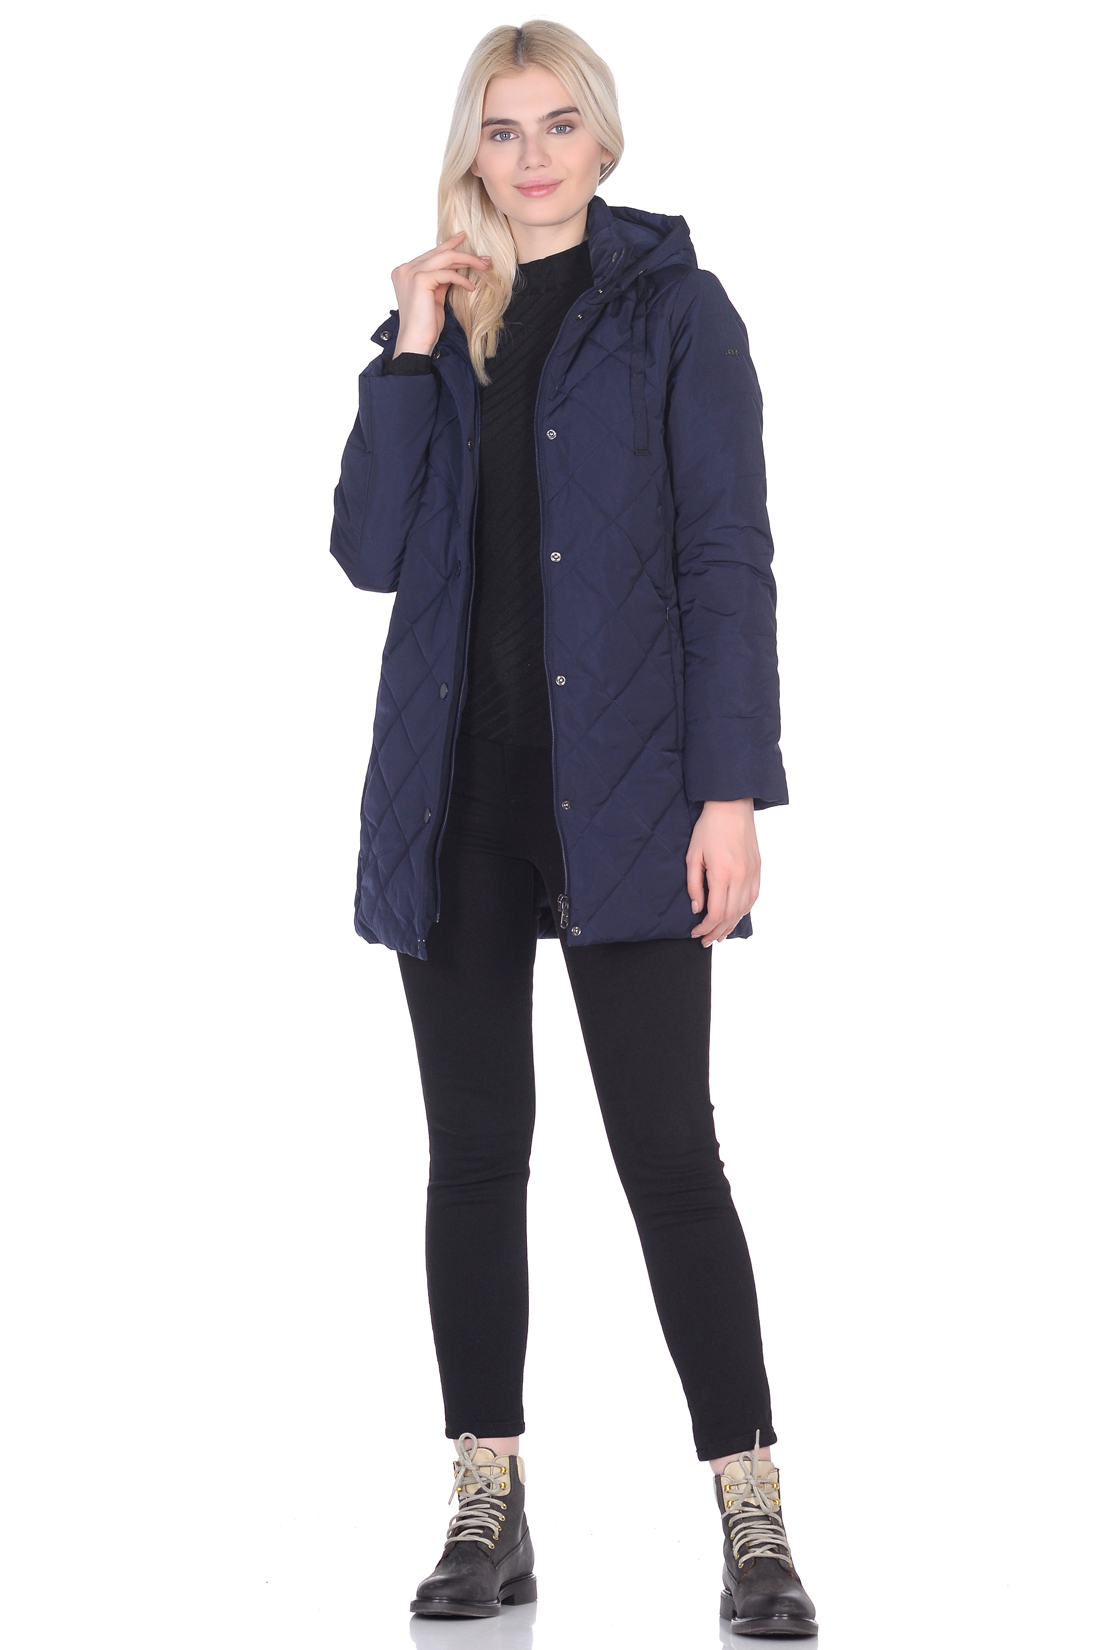 Удлинённая стёганая куртка с капюшоном (арт. baon B039022), размер L, цвет синий Удлинённая стёганая куртка с капюшоном (арт. baon B039022) - фото 5